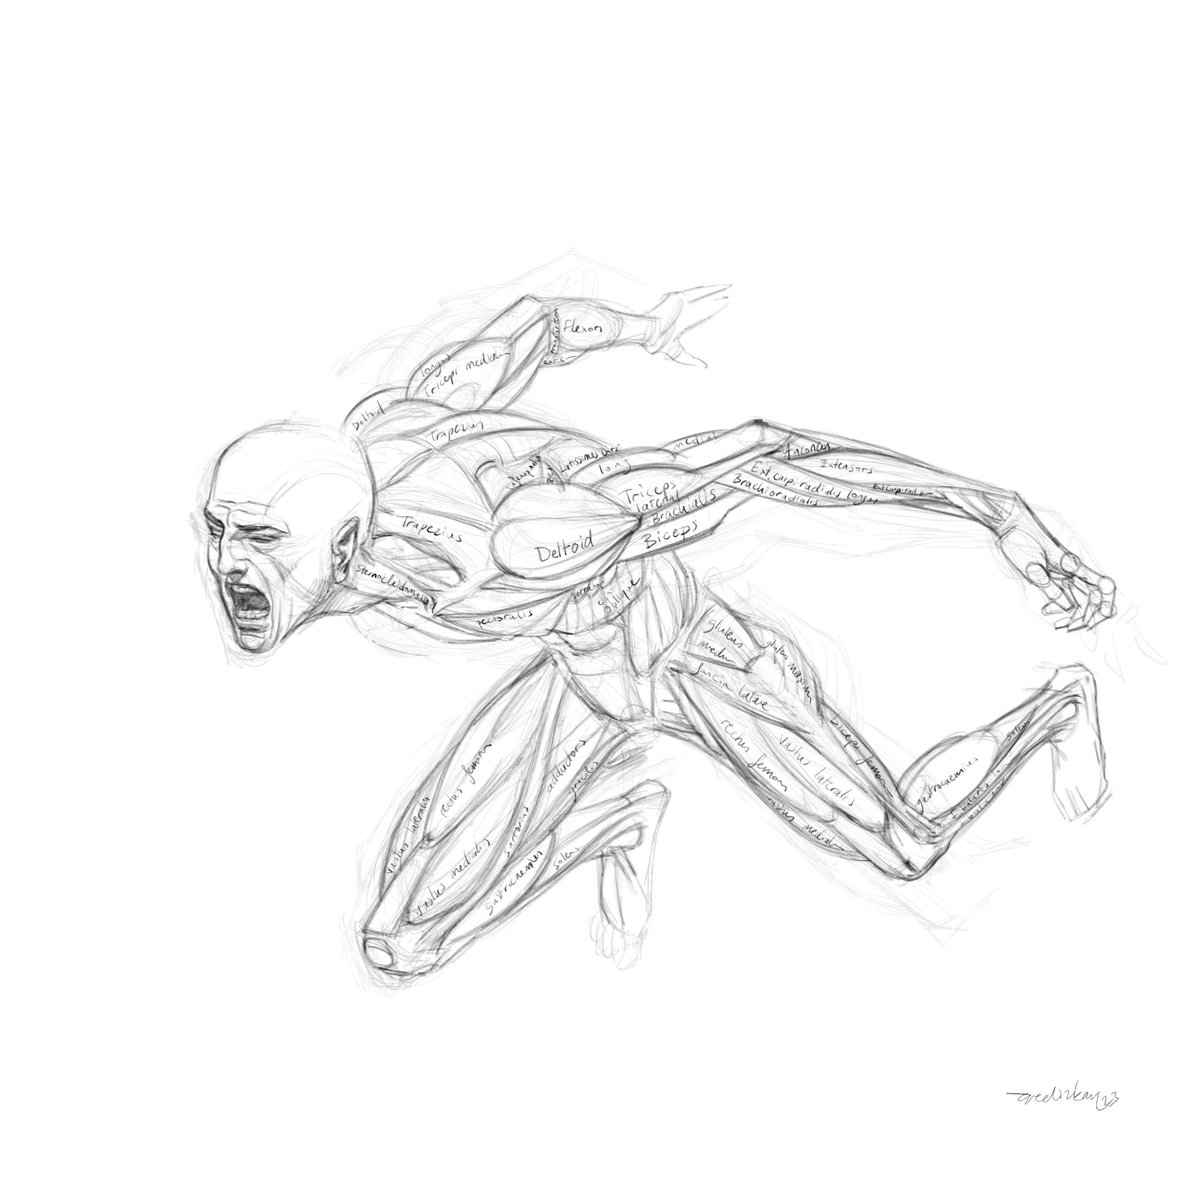 Anatomy study from imagination
#figuresketch #figuredrawing #drawinganatomy  #dibujos #dessin #sketching  #dessin #sketch #dibujo  #デサイン  #絵  #desenho #zeichnung #çizim